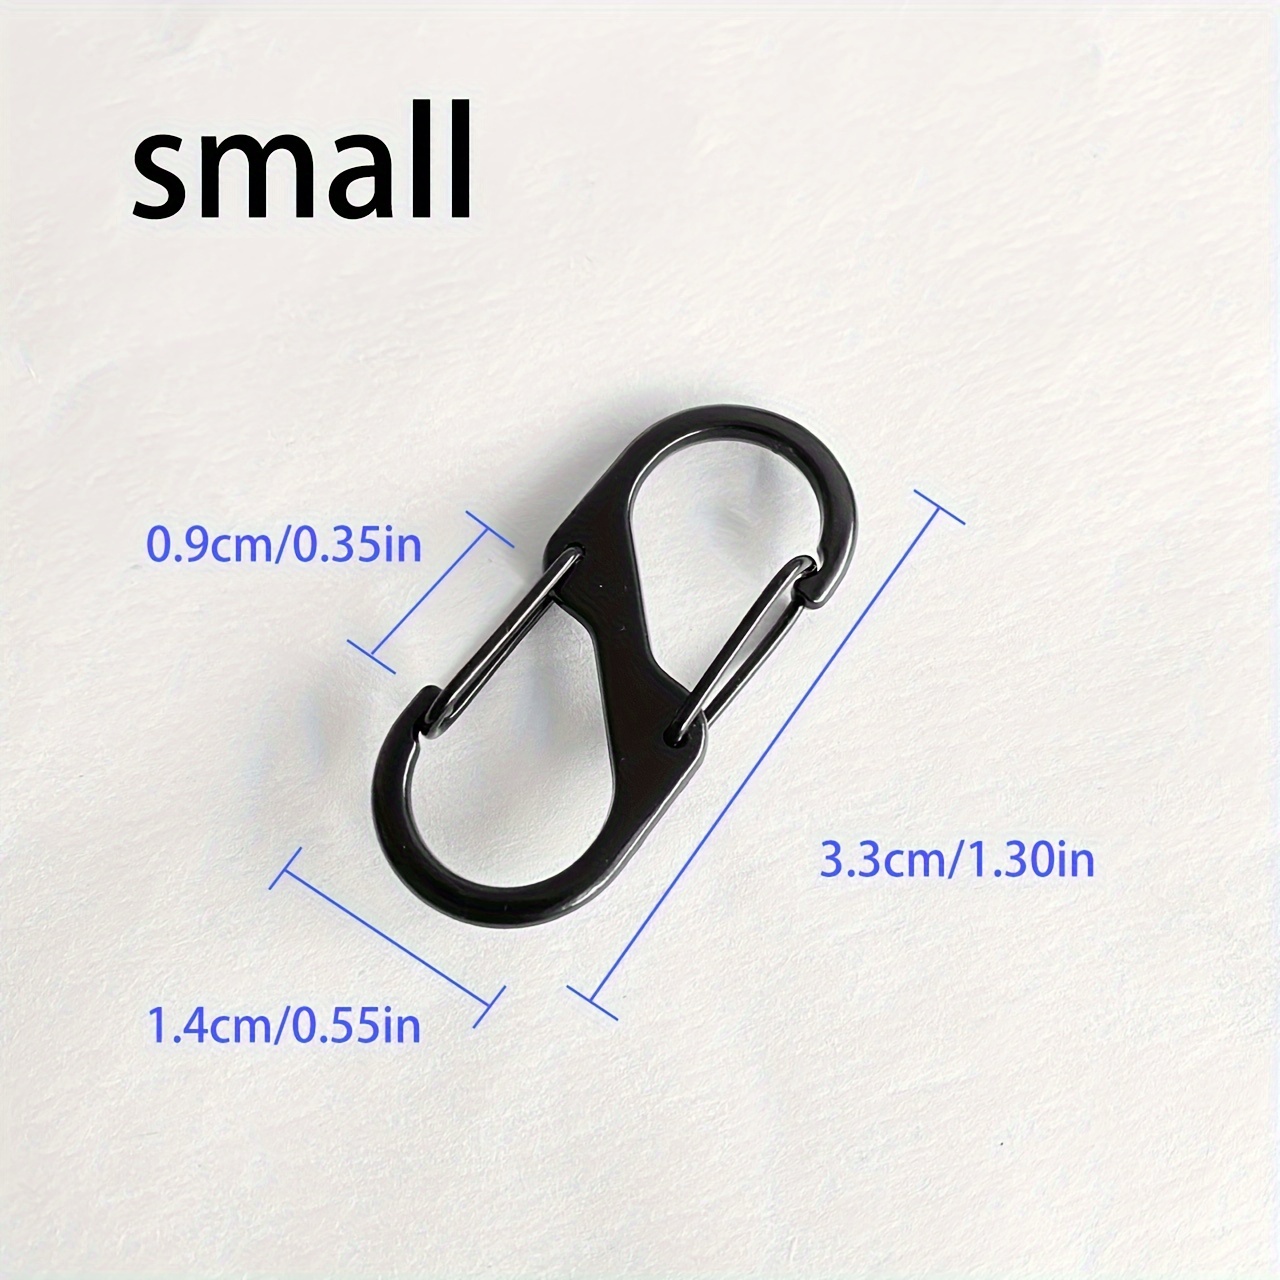 20pcs Small Alloy Keychain Clip Snap Hook Zipper Clips Anti Theft